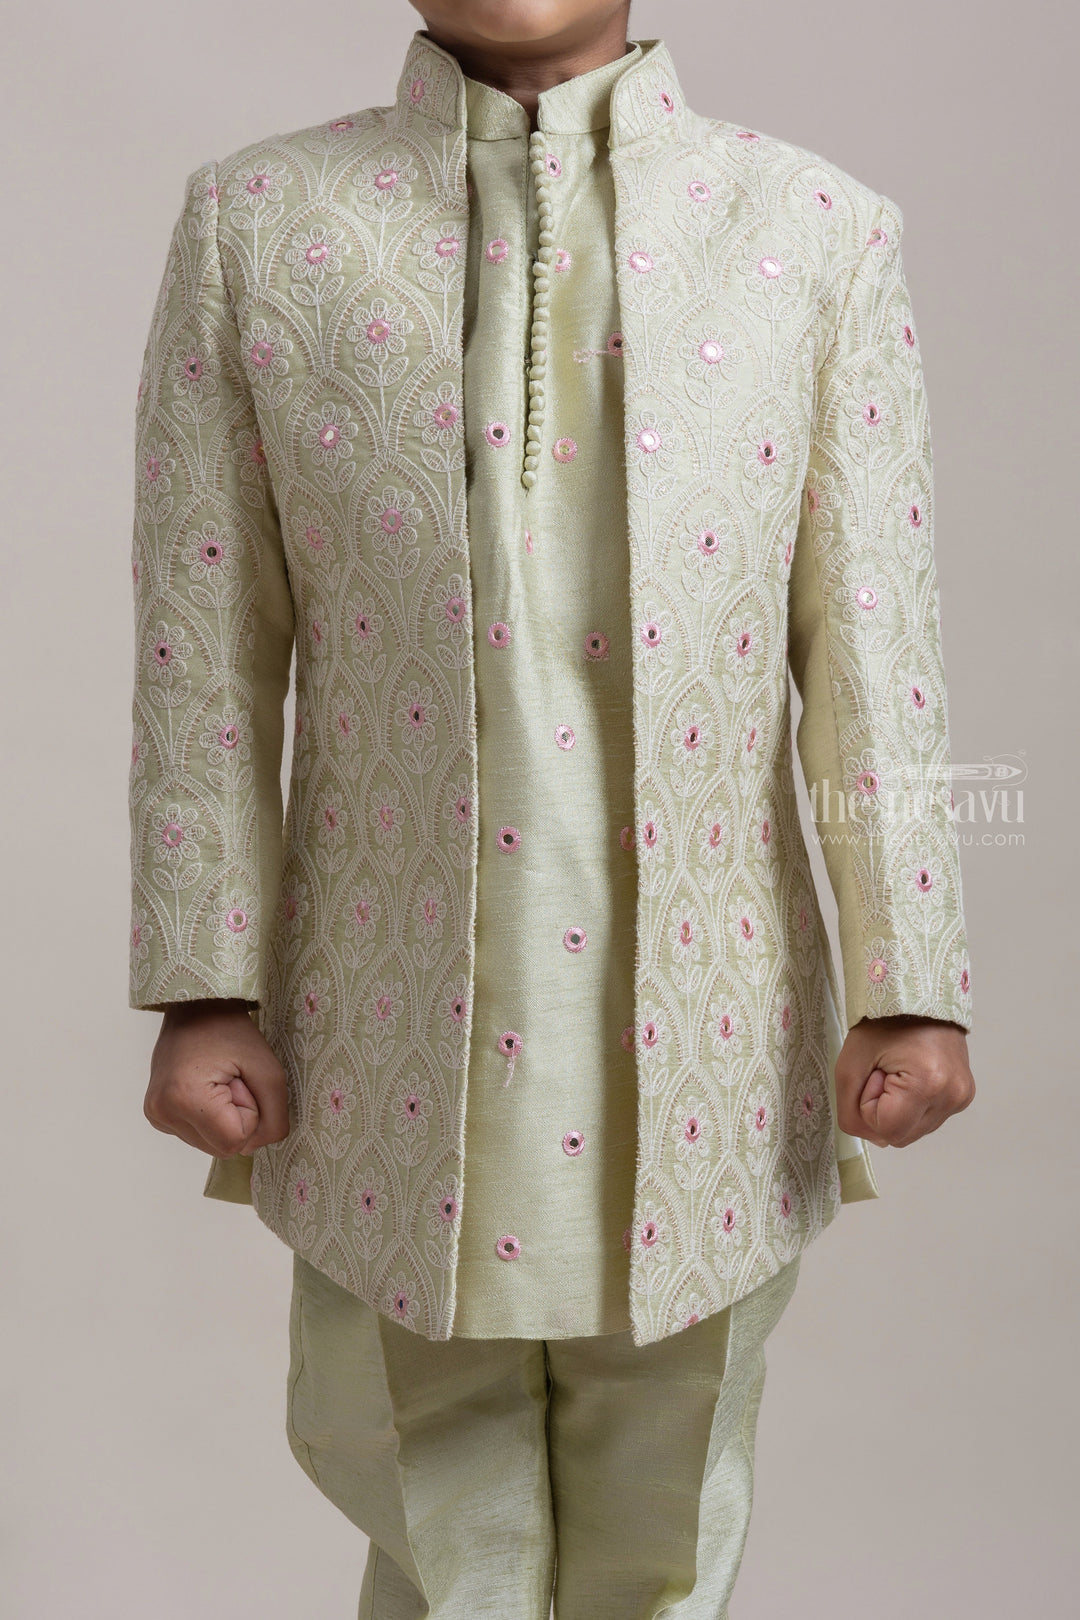 The Nesavu Ethnic Sets Elegant Ethnic Green Silk Kurta And Pant With Floral Embroidered Over Coat For Boys psr silks Nesavu